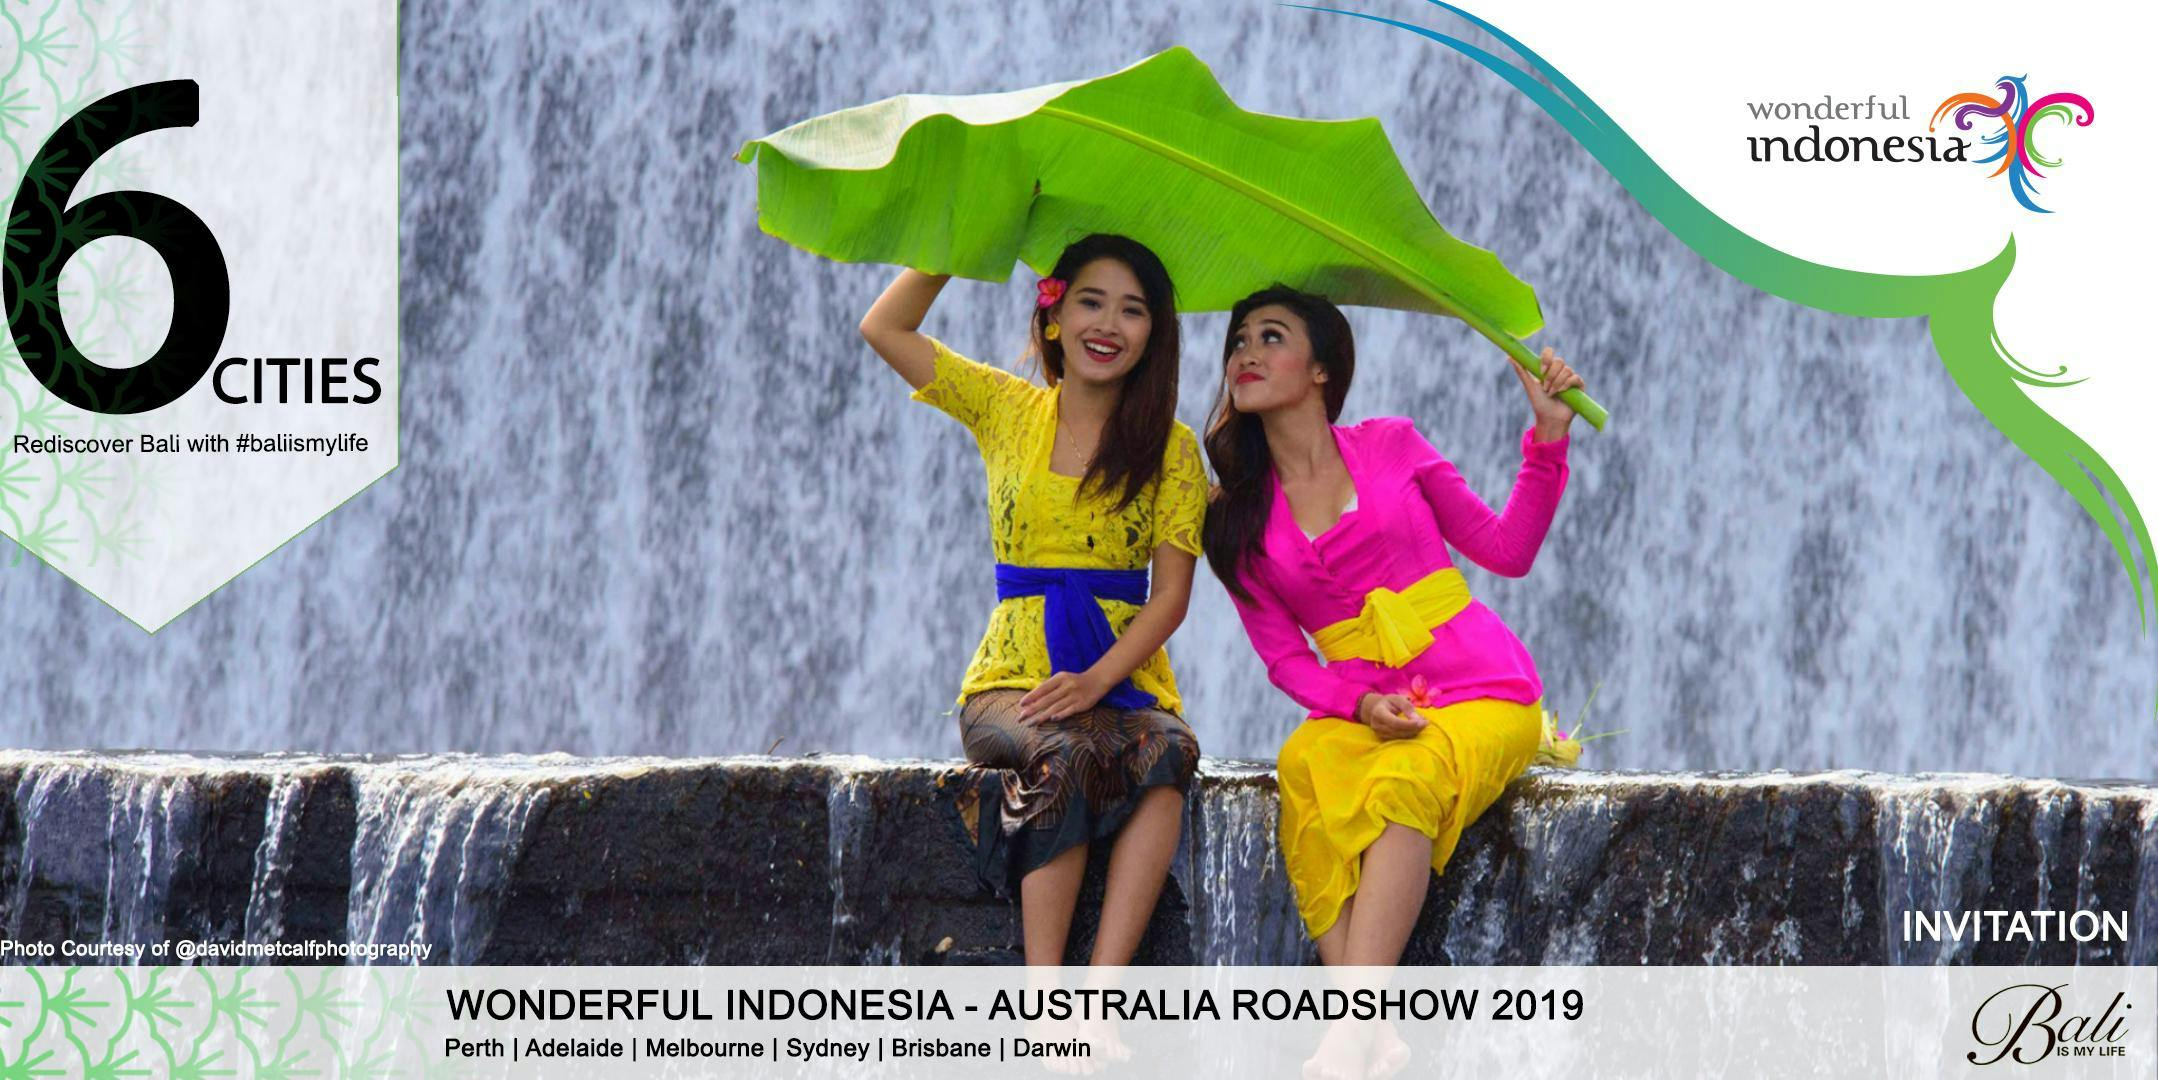 Rediscover Bali with Wonderful Indonesia Roadshow Adelaide 2019 